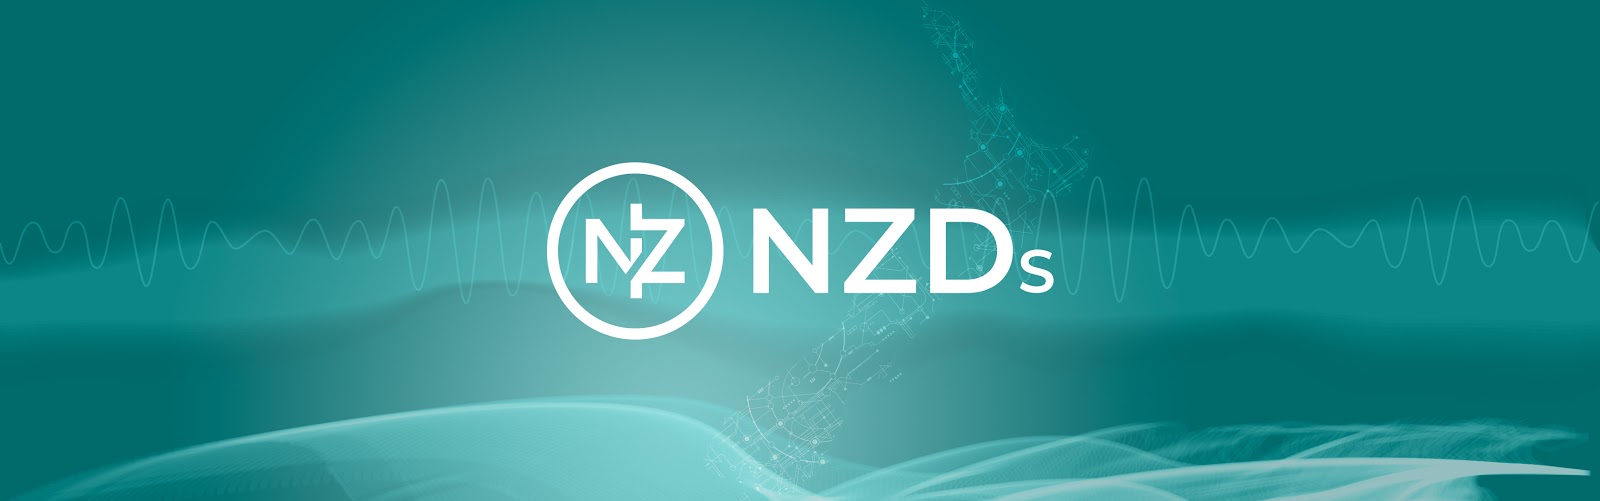 Techemynt Launches First New Zealand Dollar Stablecoin, $NZDs